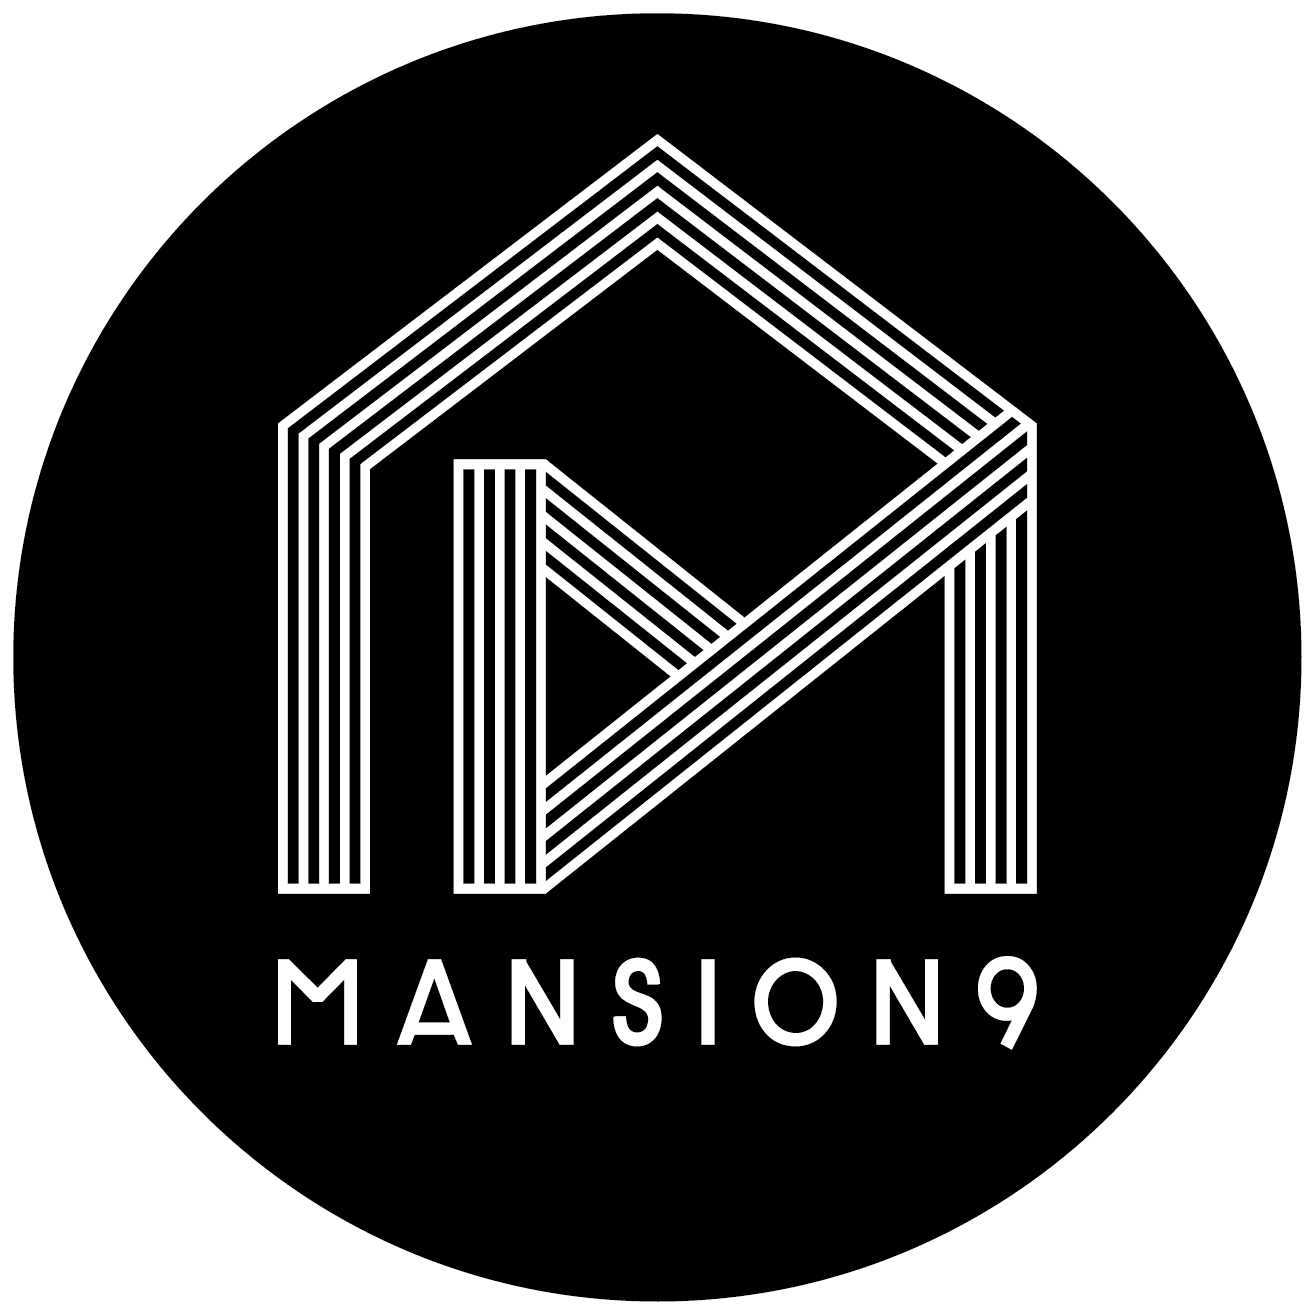 MANSION9